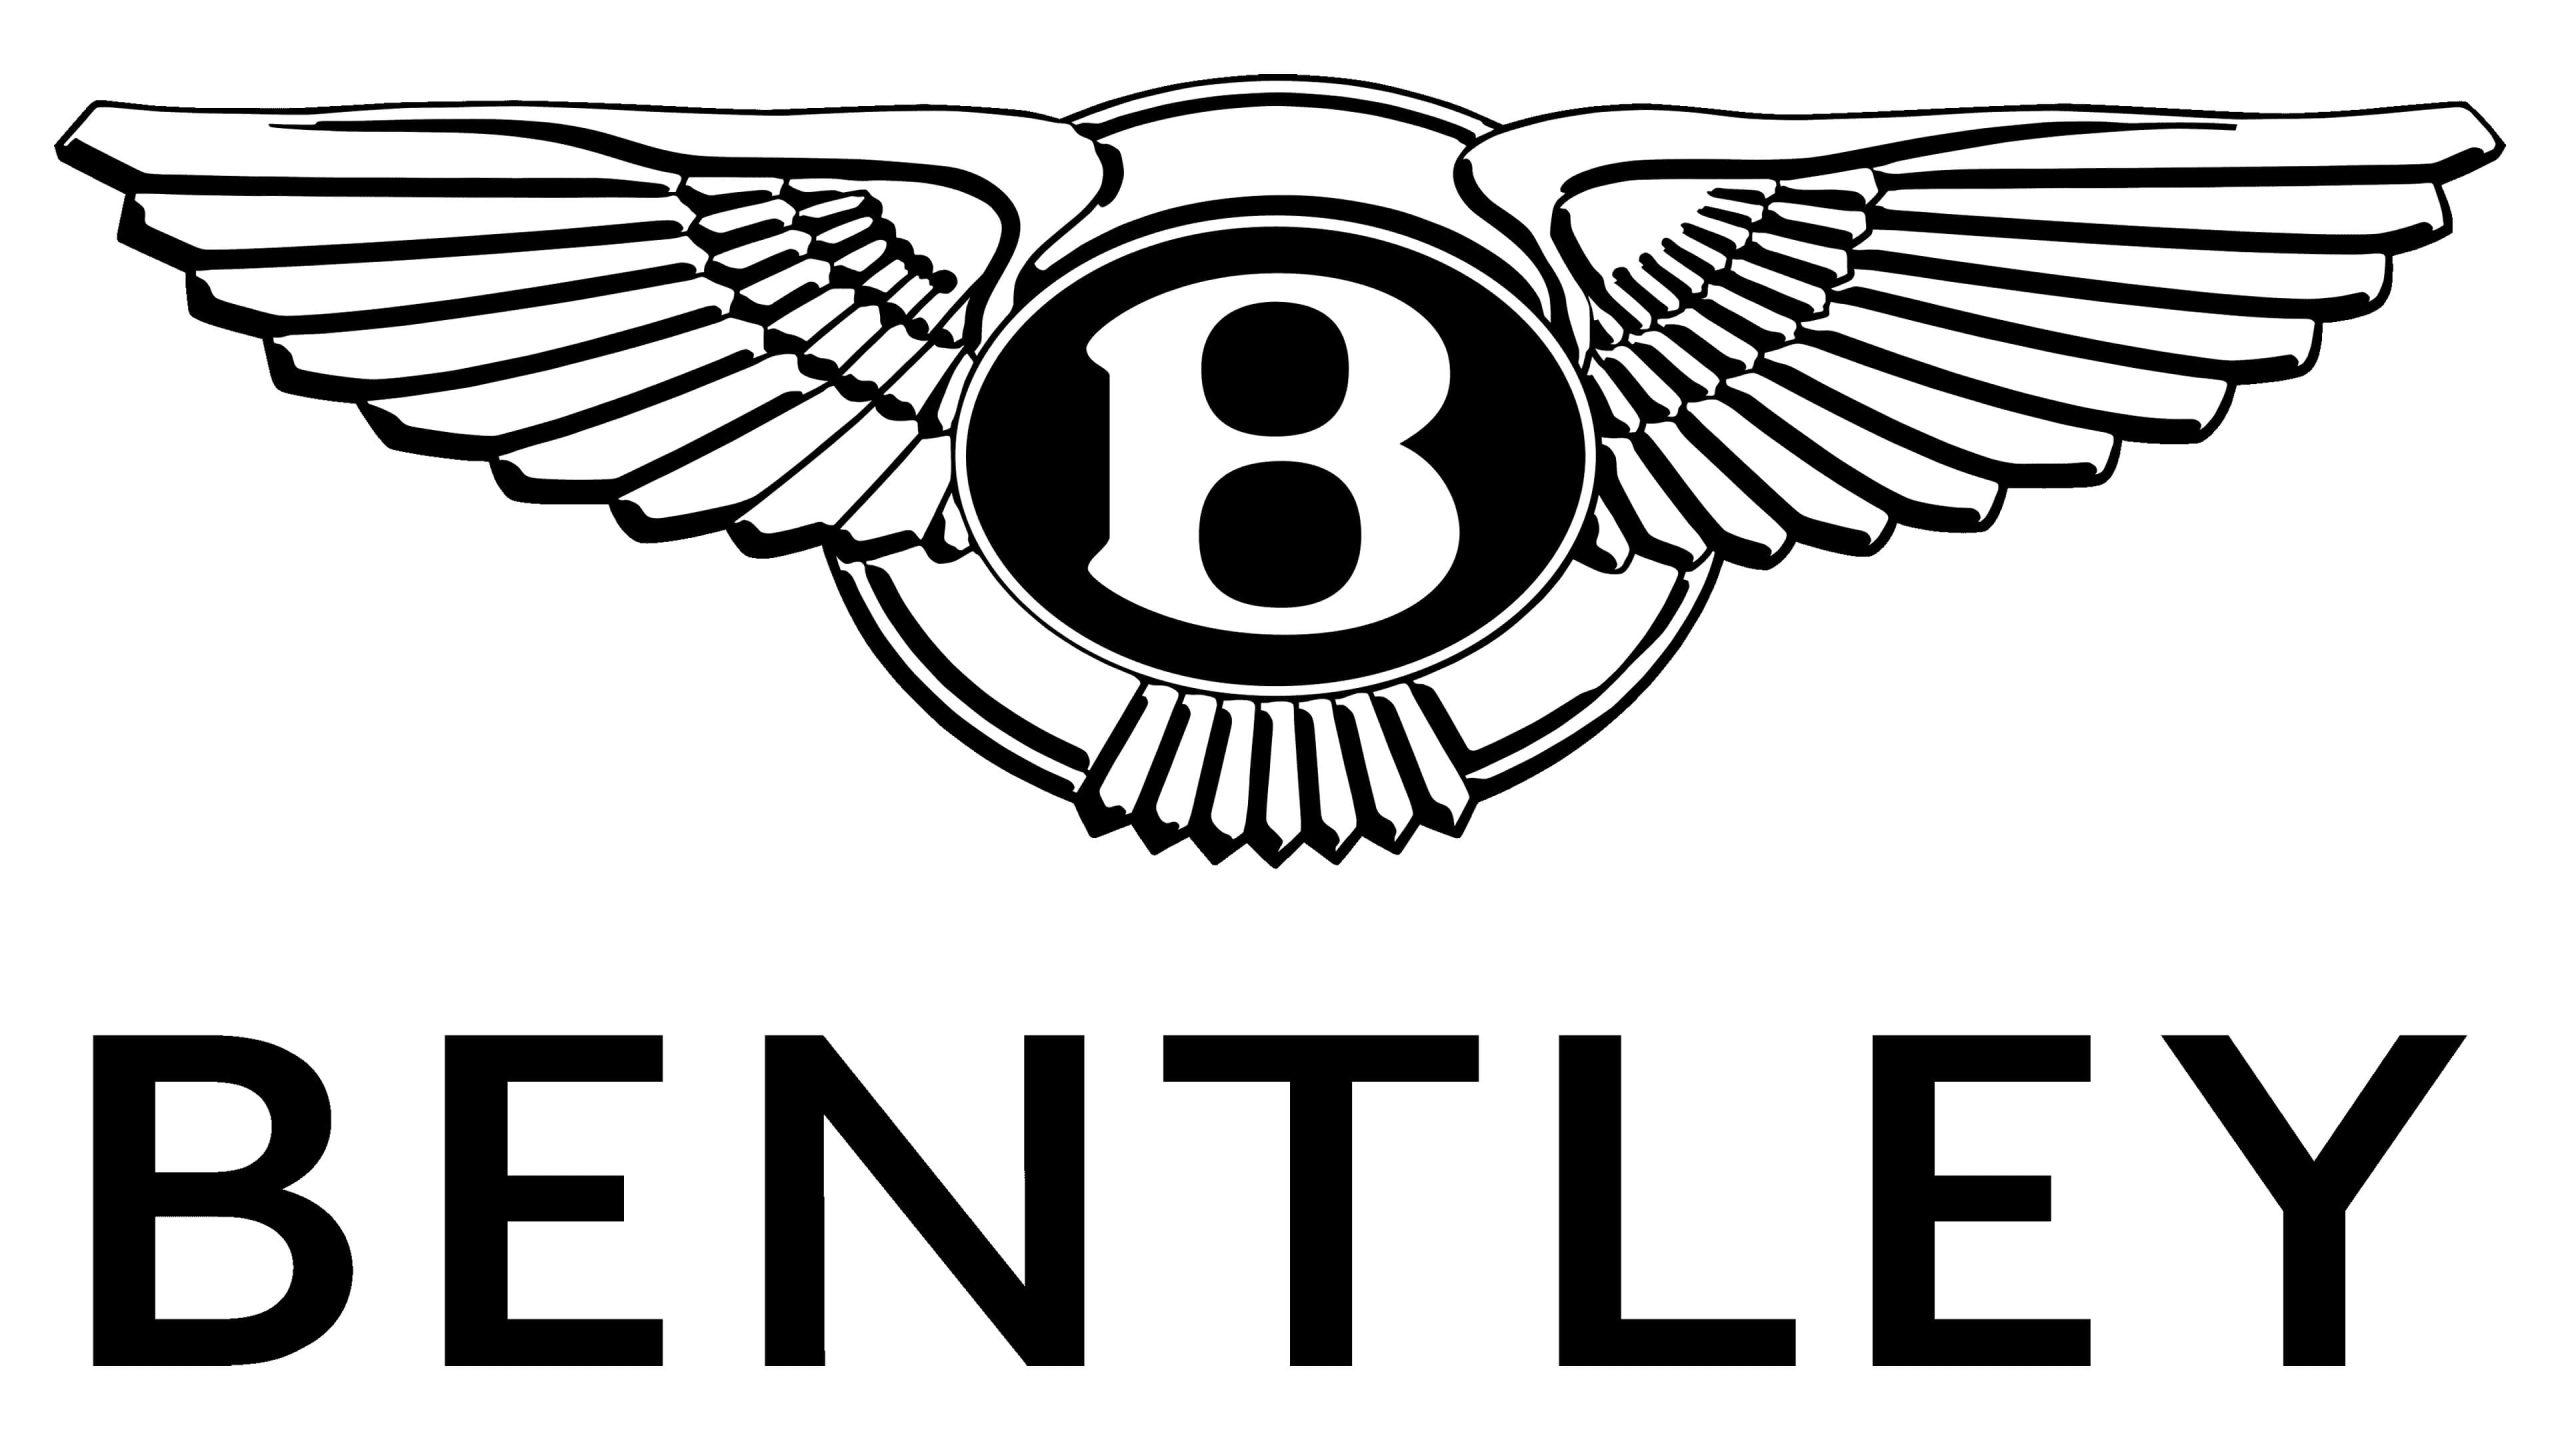 Hãng Bentley (Ảnh: Internet)